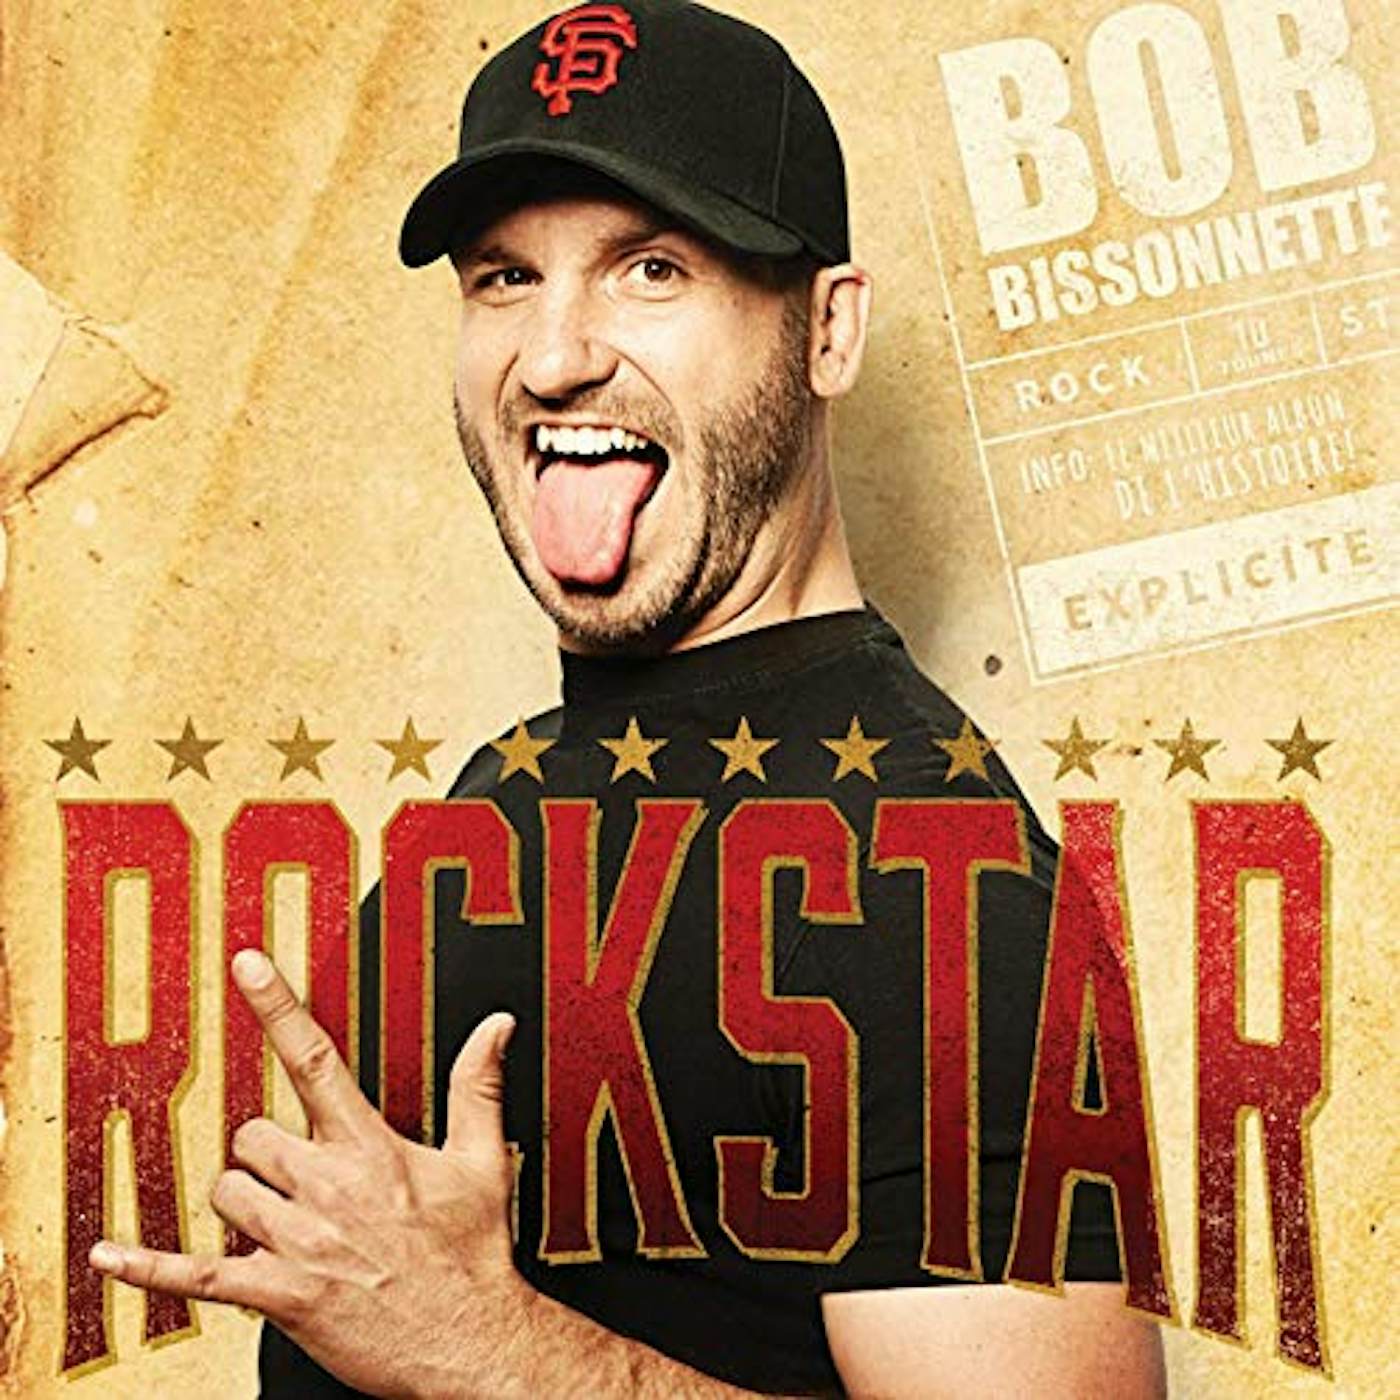 Bob Bissonnette Rockstar Vinyl Record